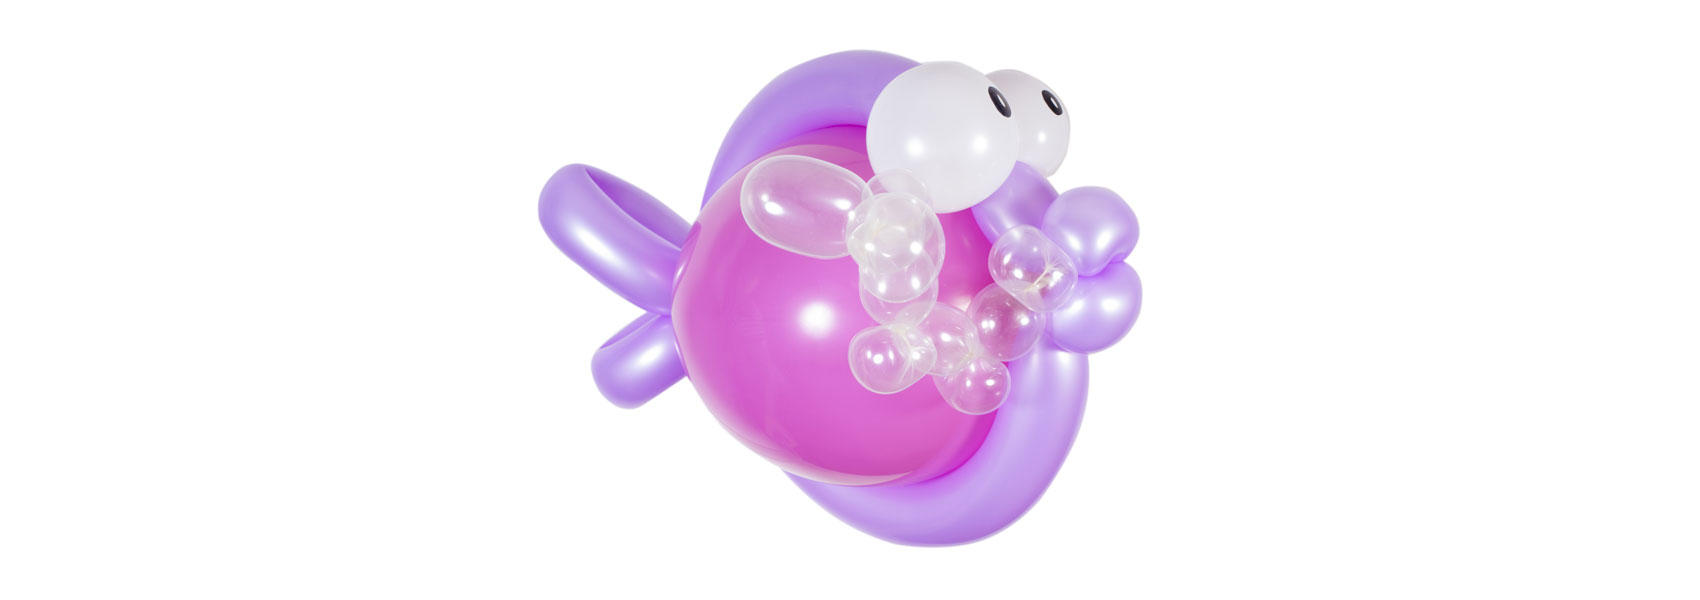 Creative Balloon Art Image